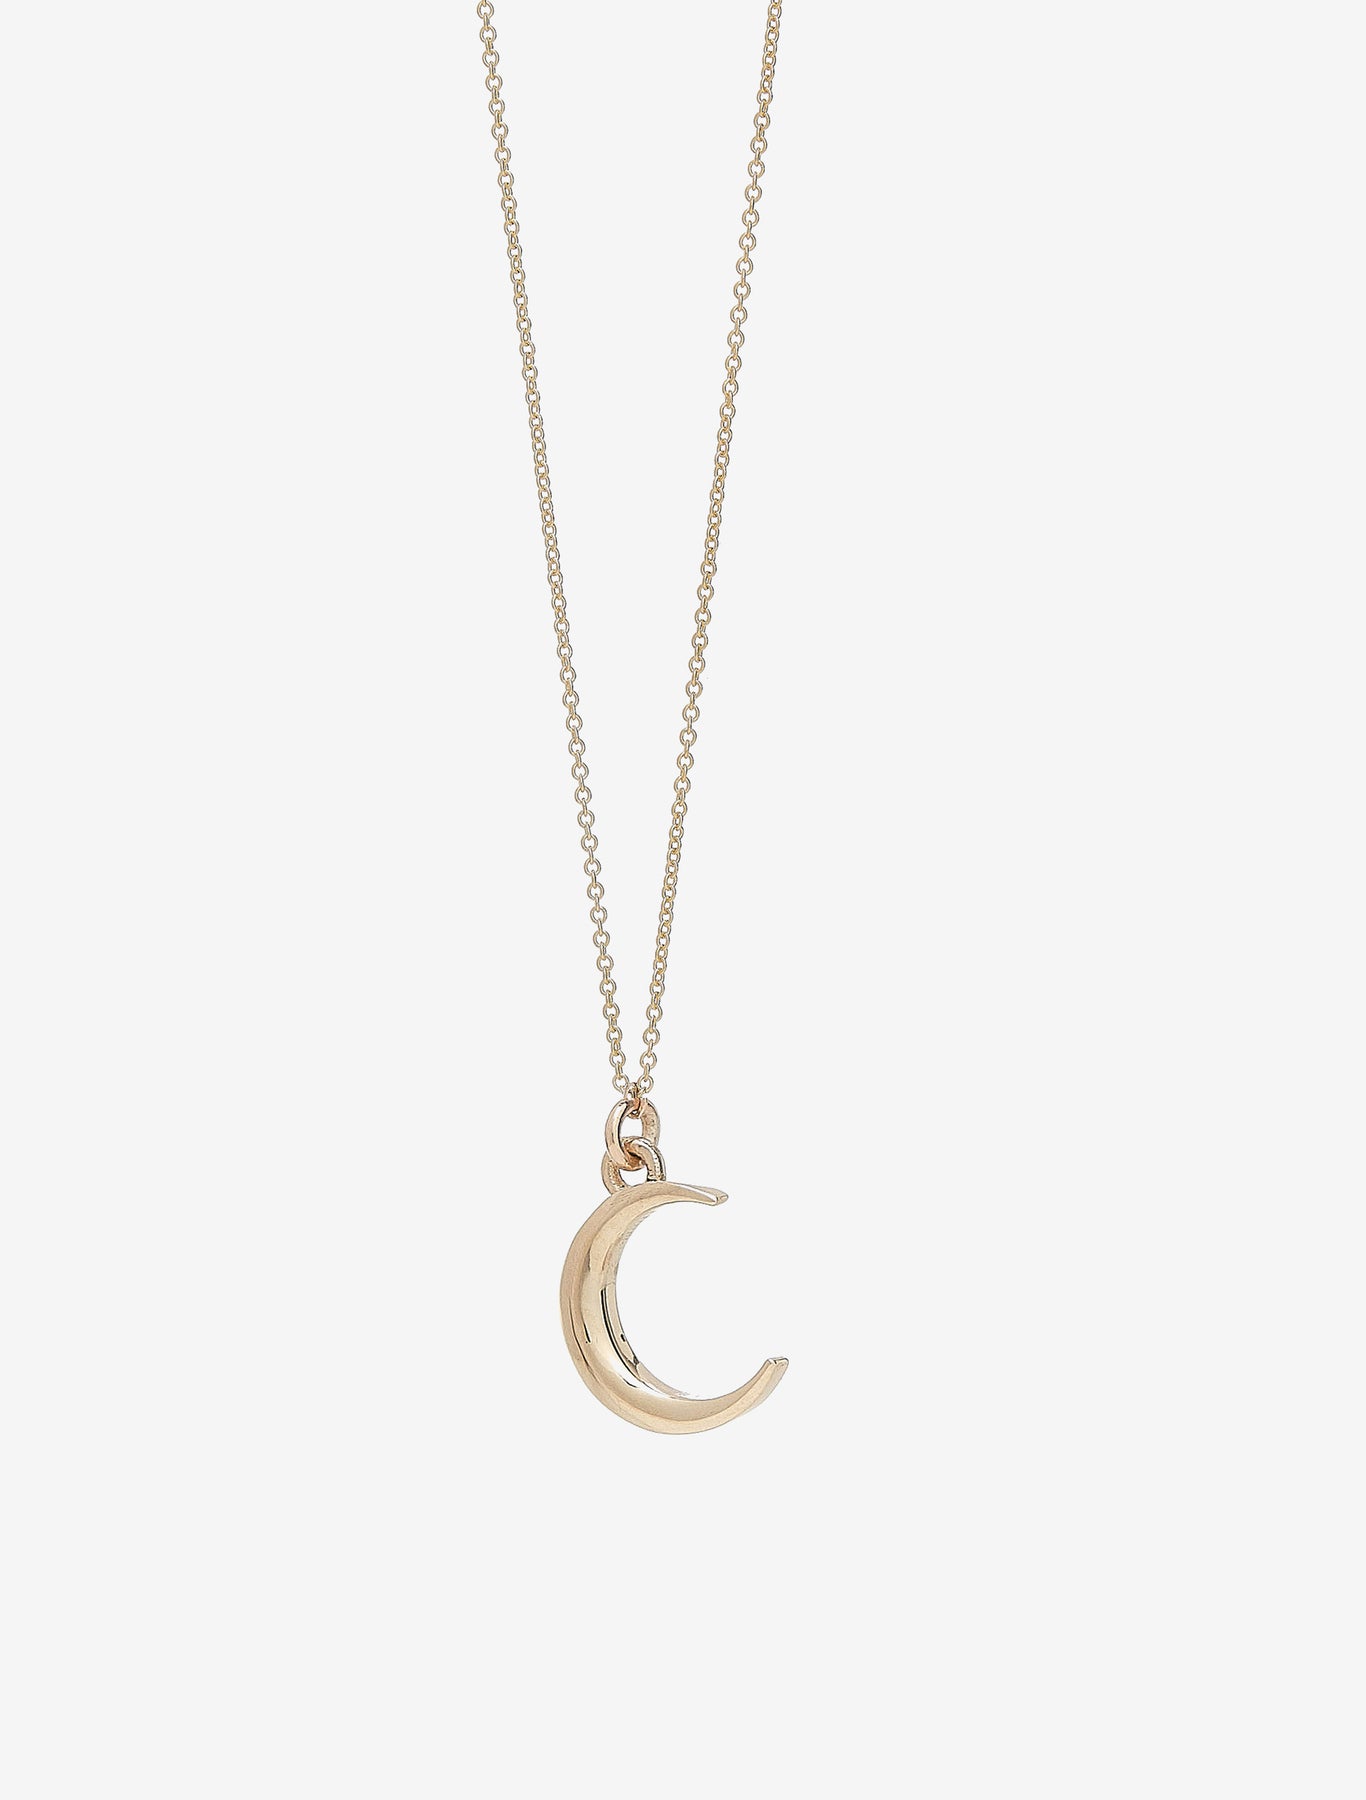 Crescent Moon Pendant | The Jewelry Edit